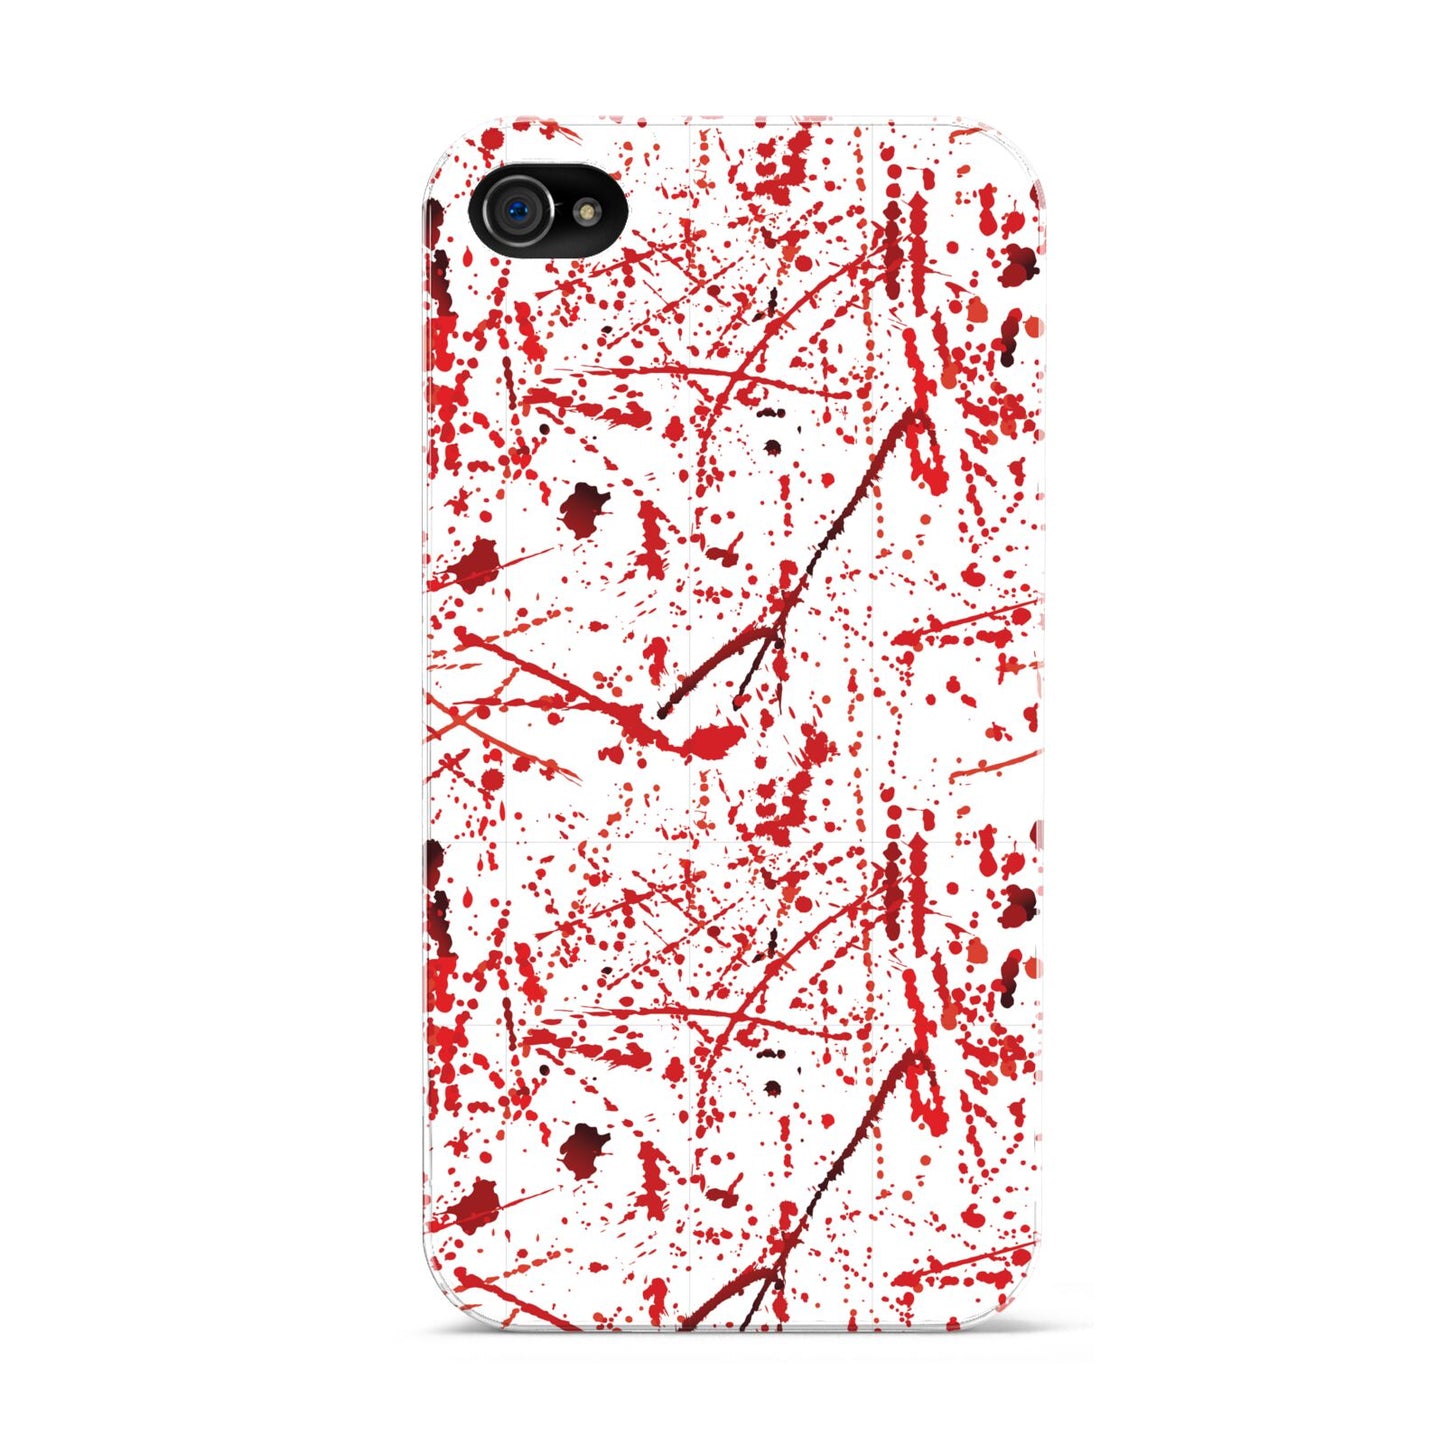 Blood Splatter Apple iPhone 4s Case